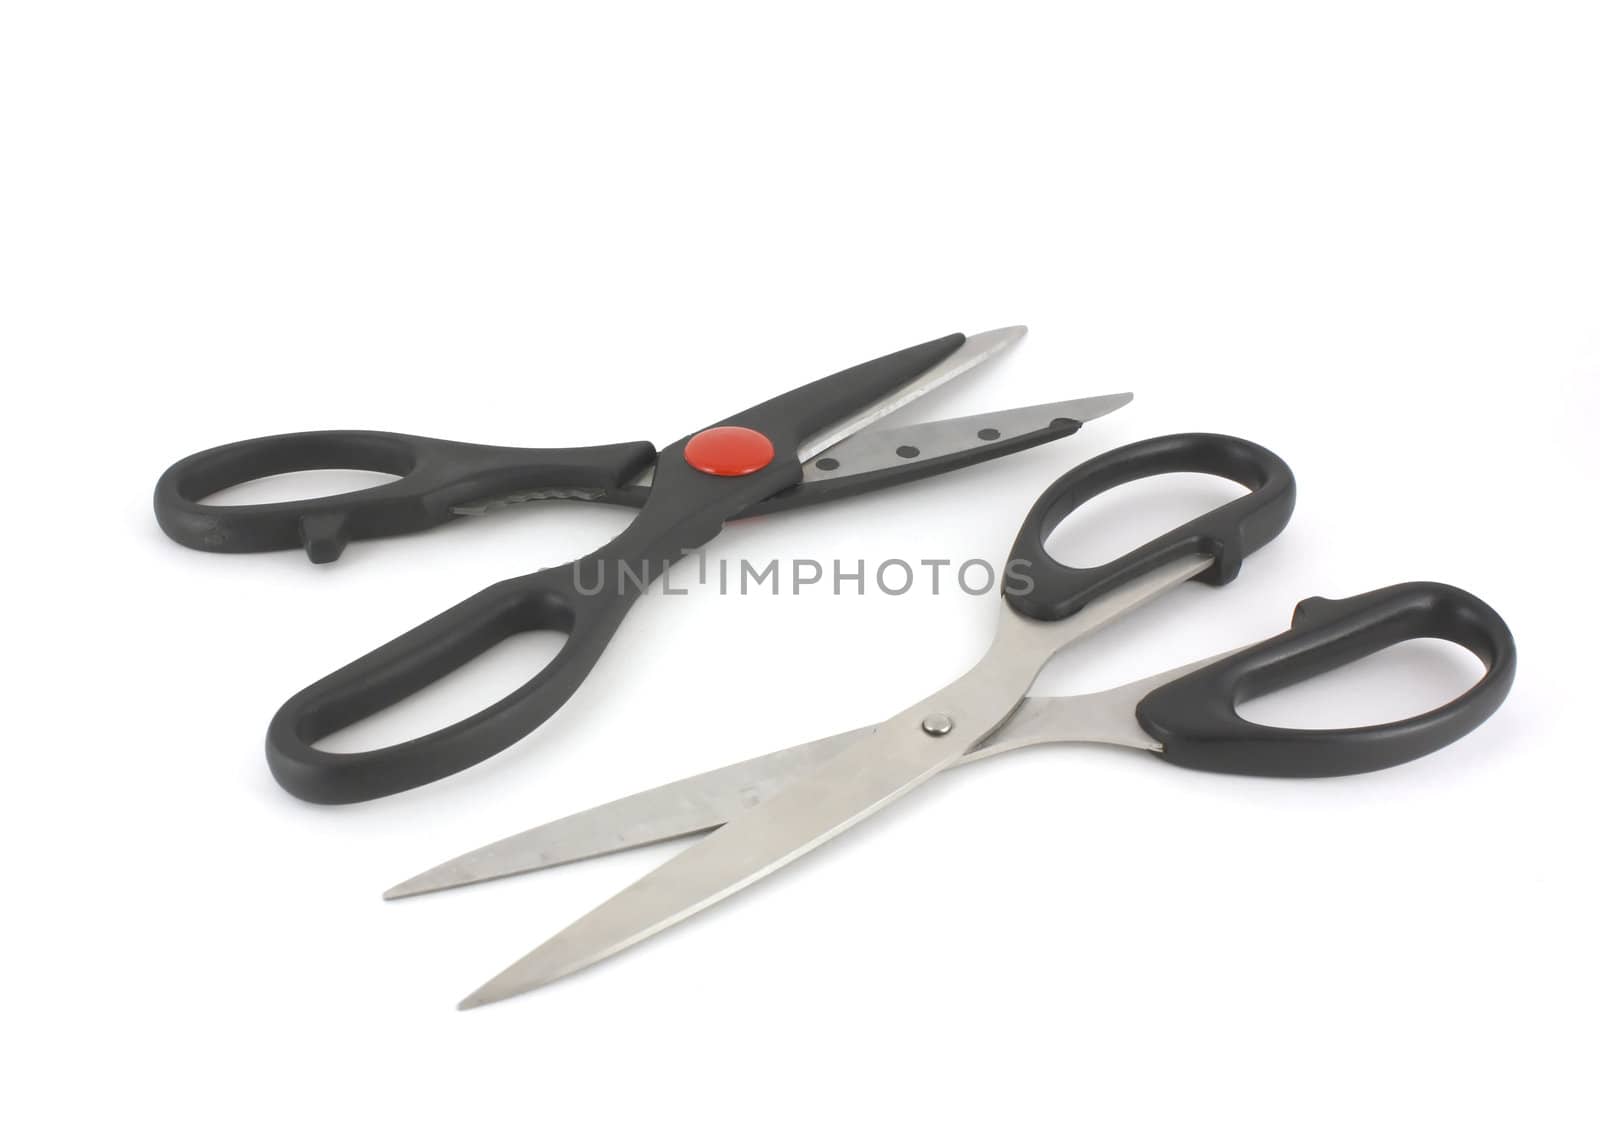 Two kitchen scissors